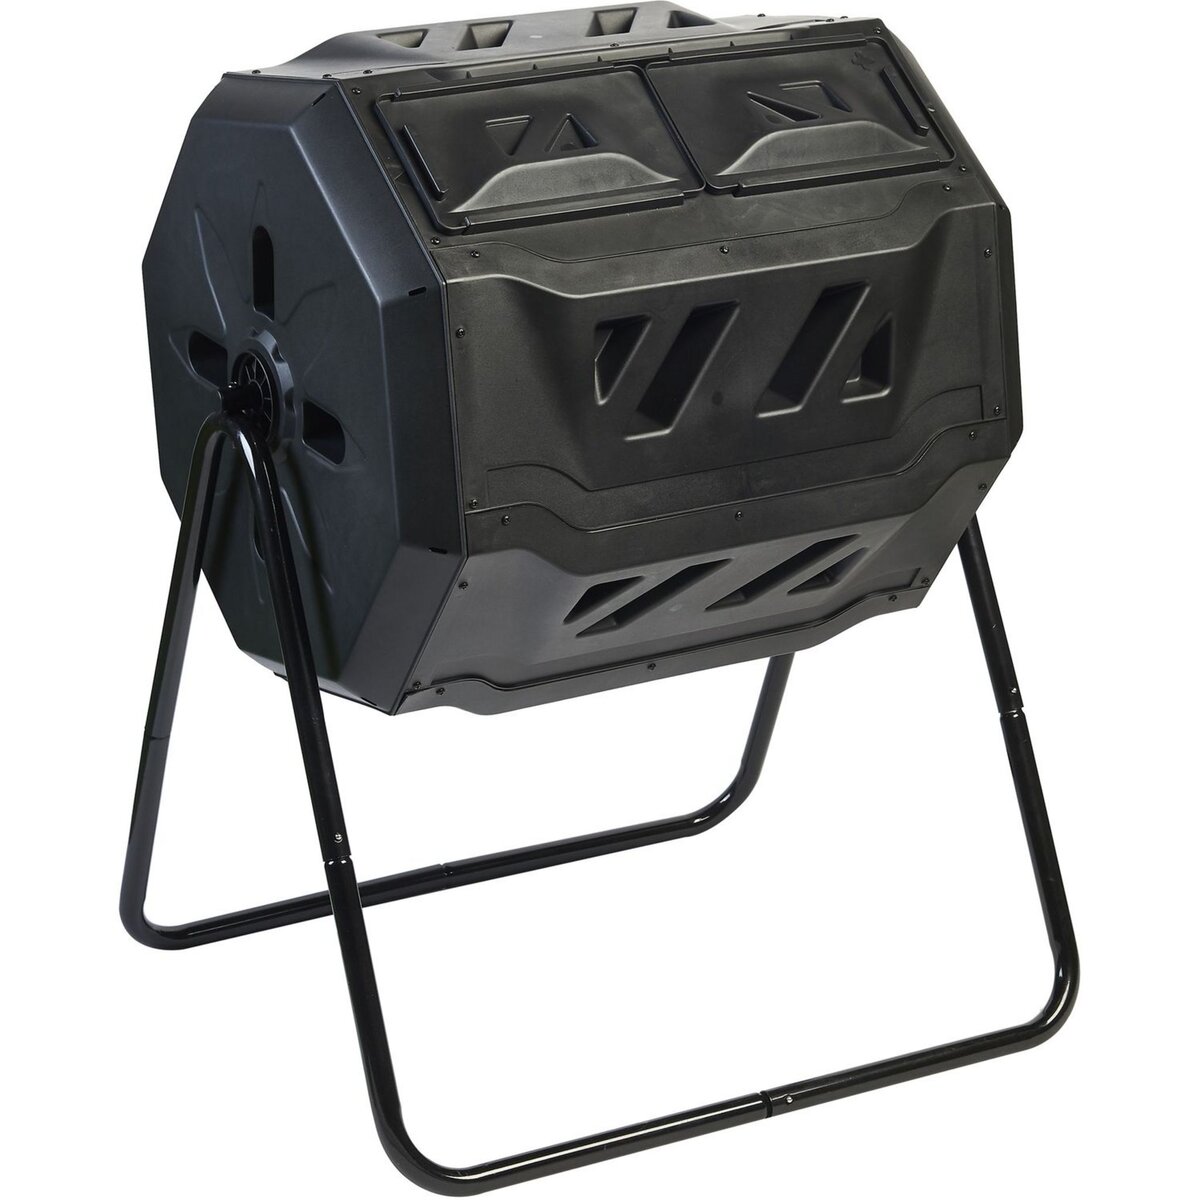 GARDENSTAR Composteur rotatif - Noir - H93 cm